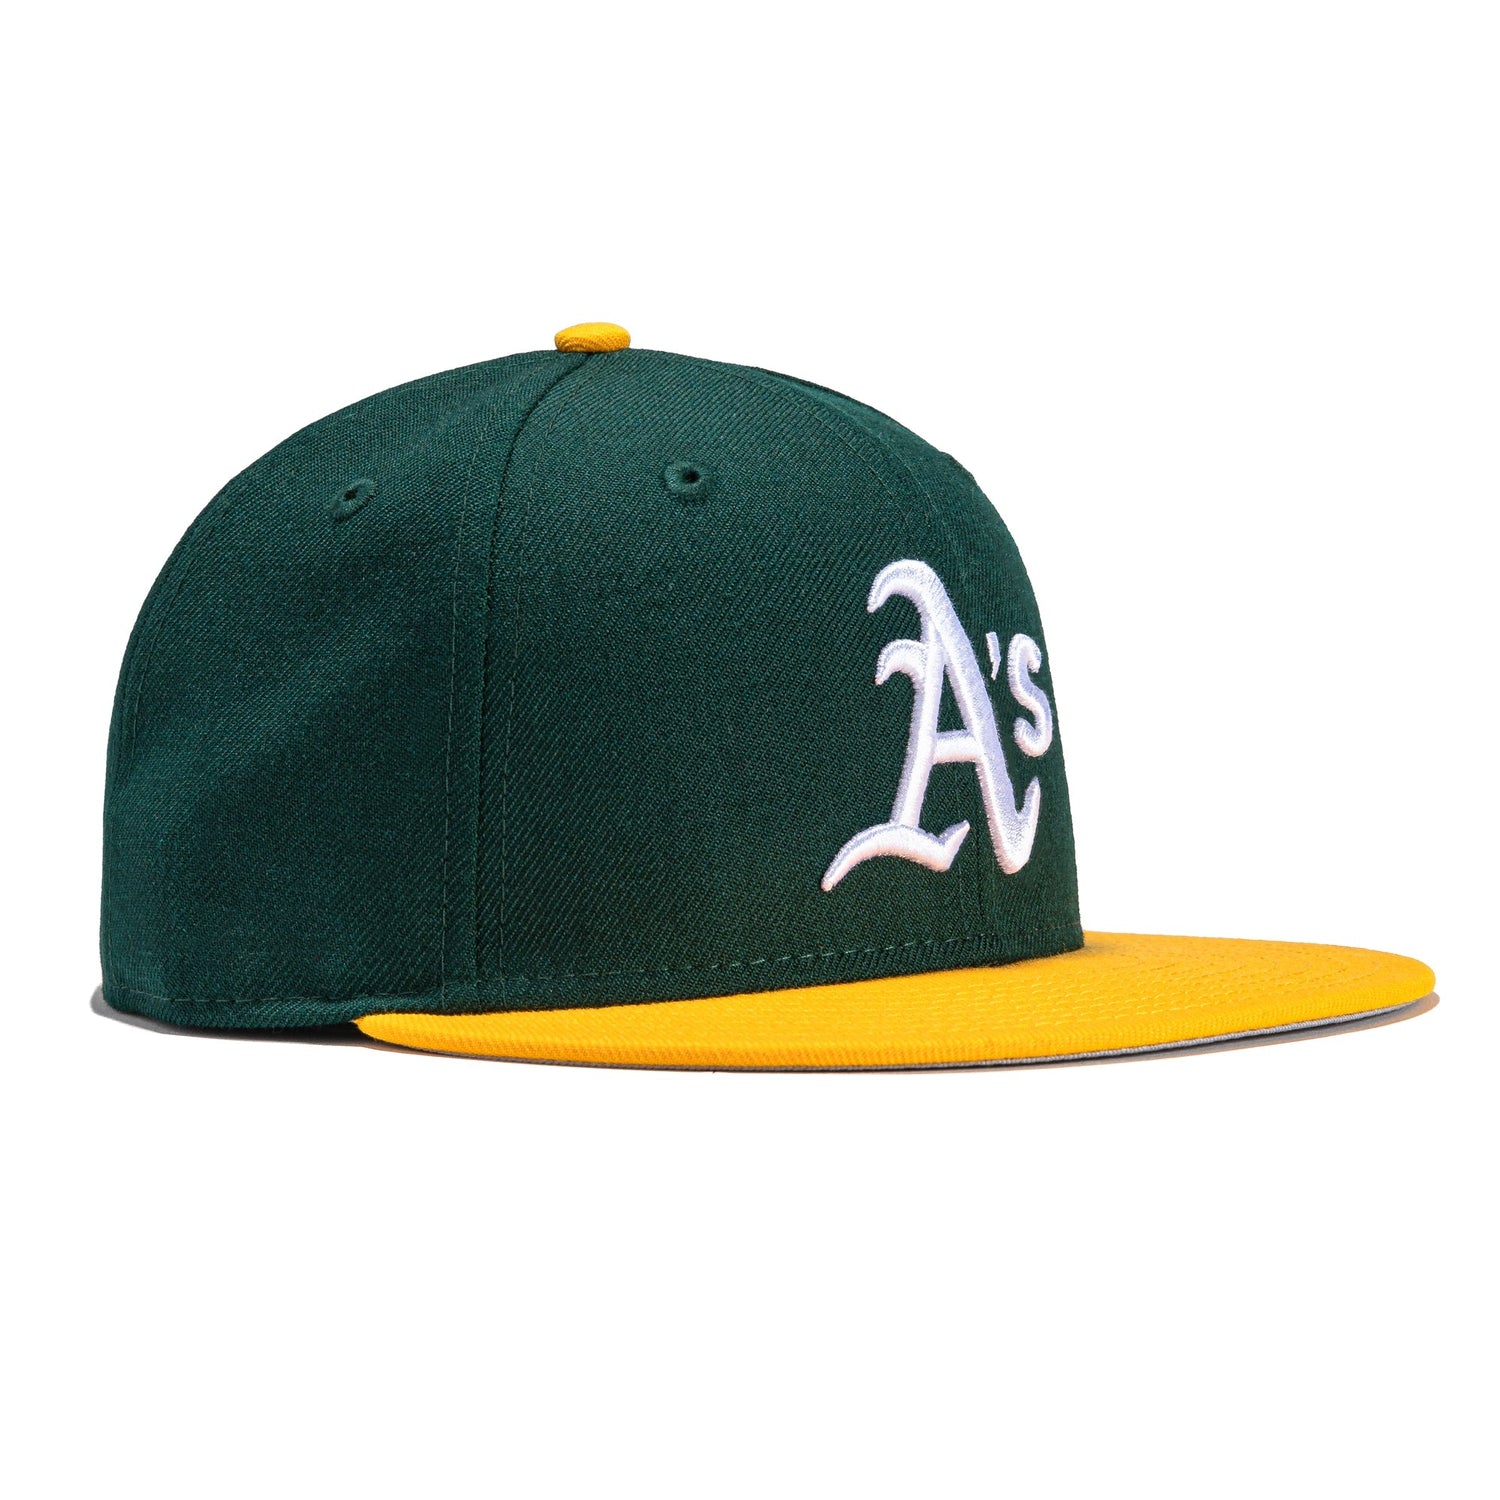 New Era 59FIFTY Retro On-Field Oakland Athletics Home Hat - Green Gold